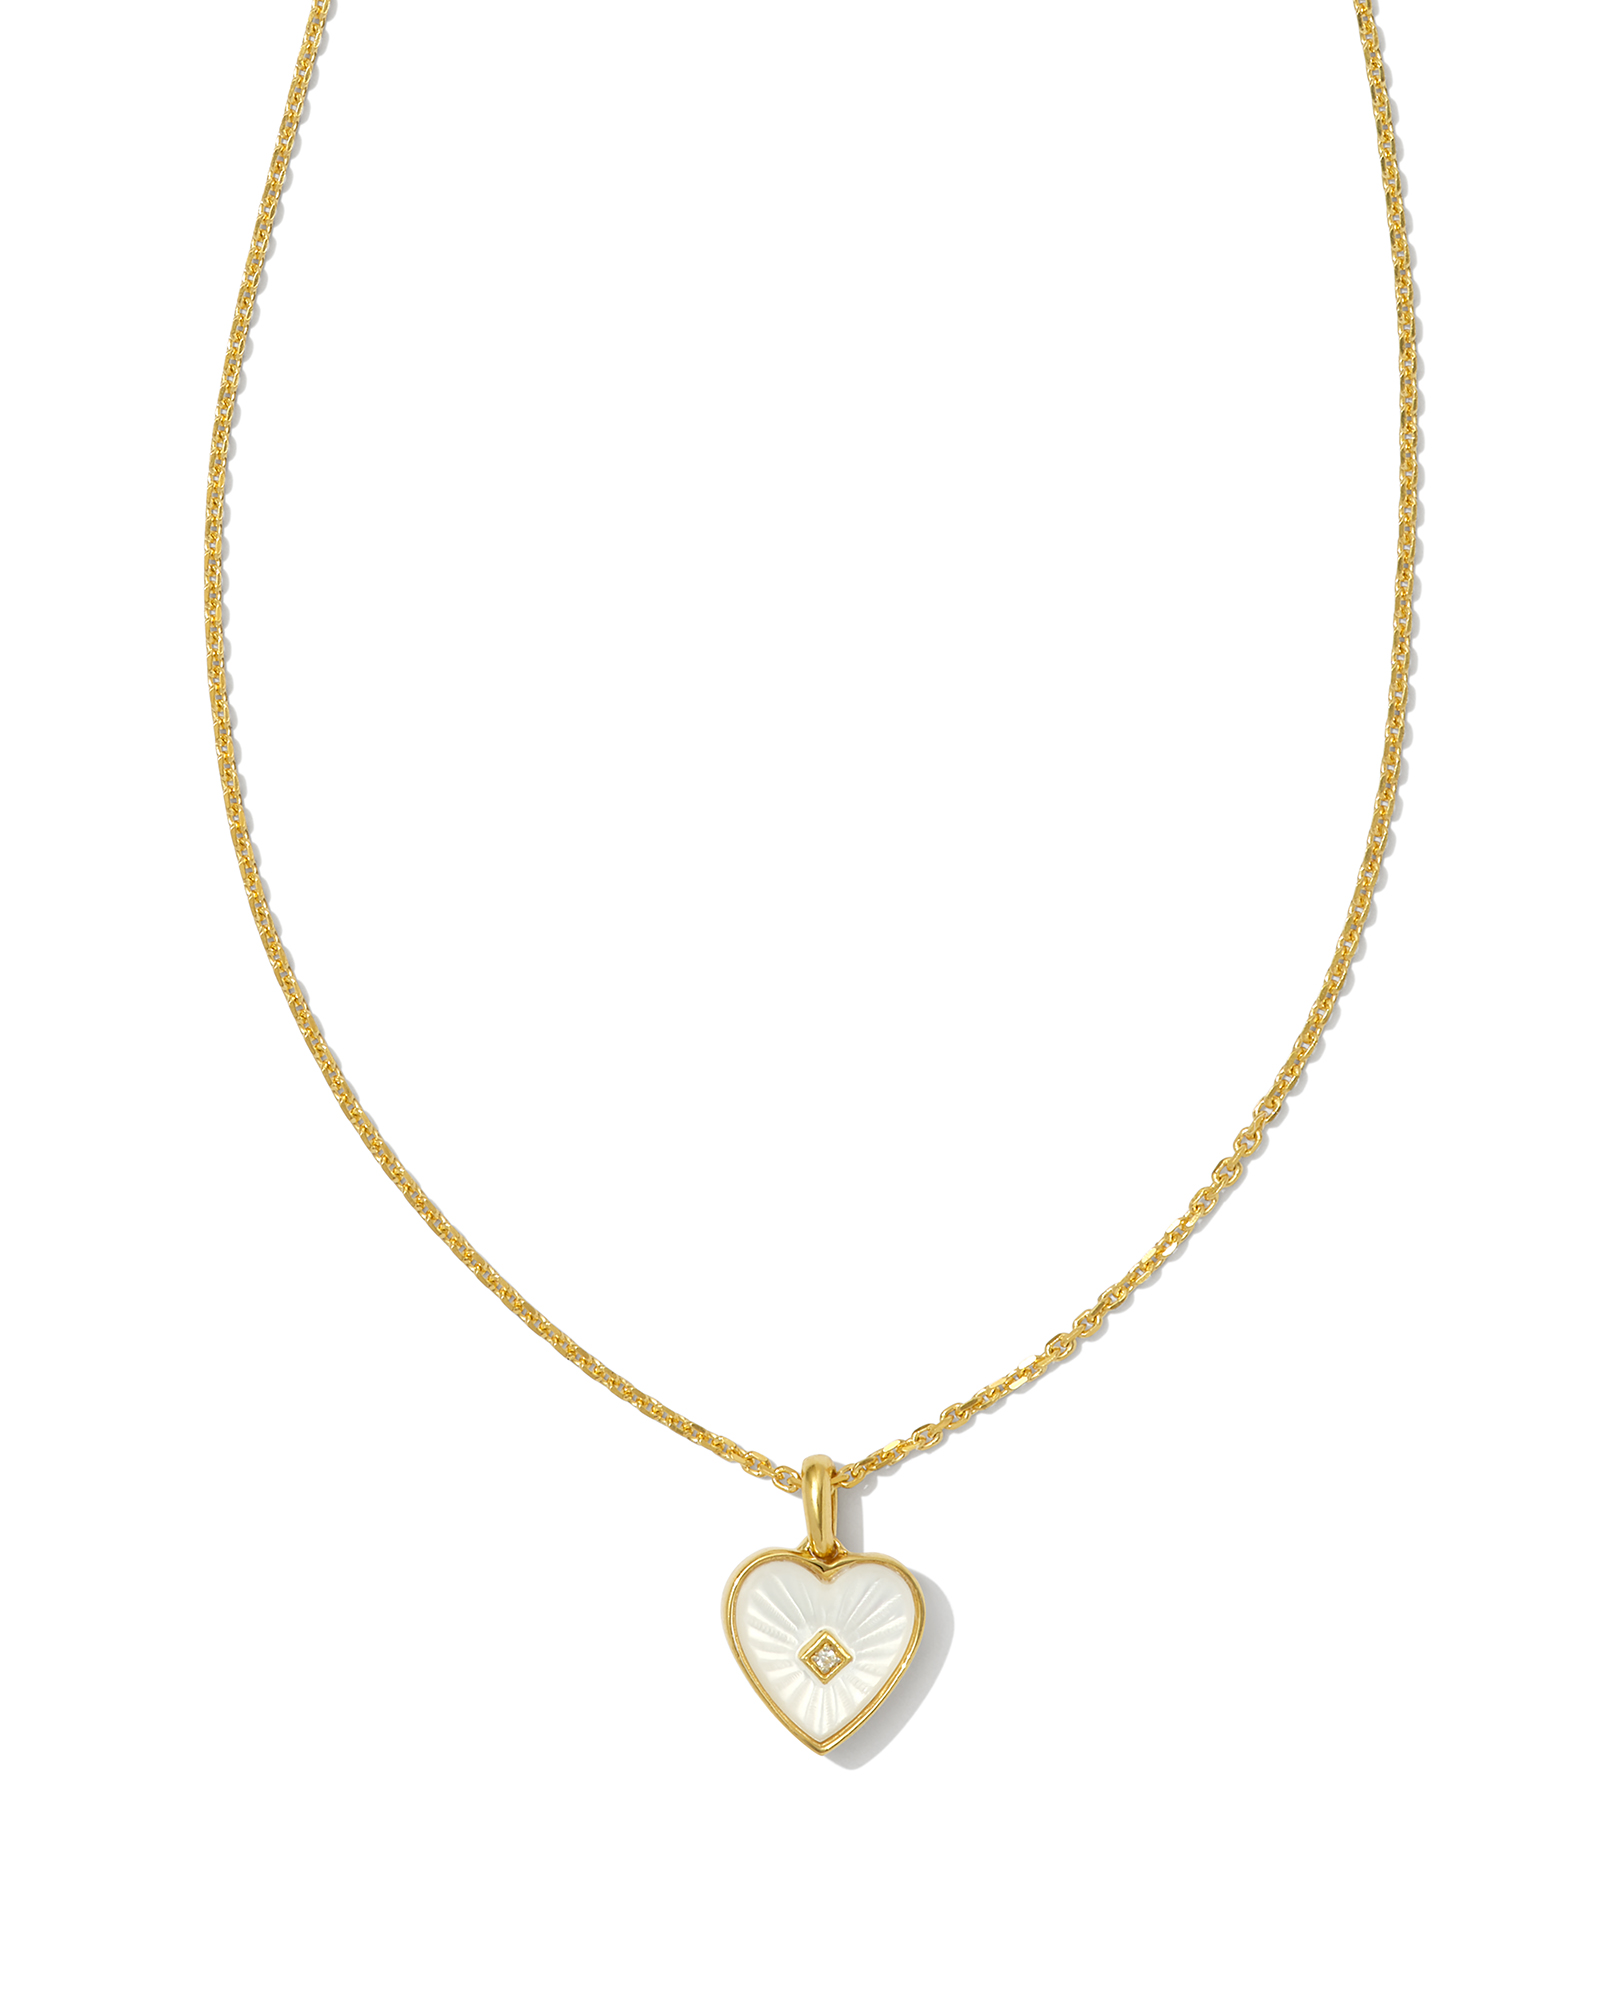 Adalynn 18k Gold Vermeil Heart Pendant Necklace in Ivory Mother-of-Pearl | Kendra Scott